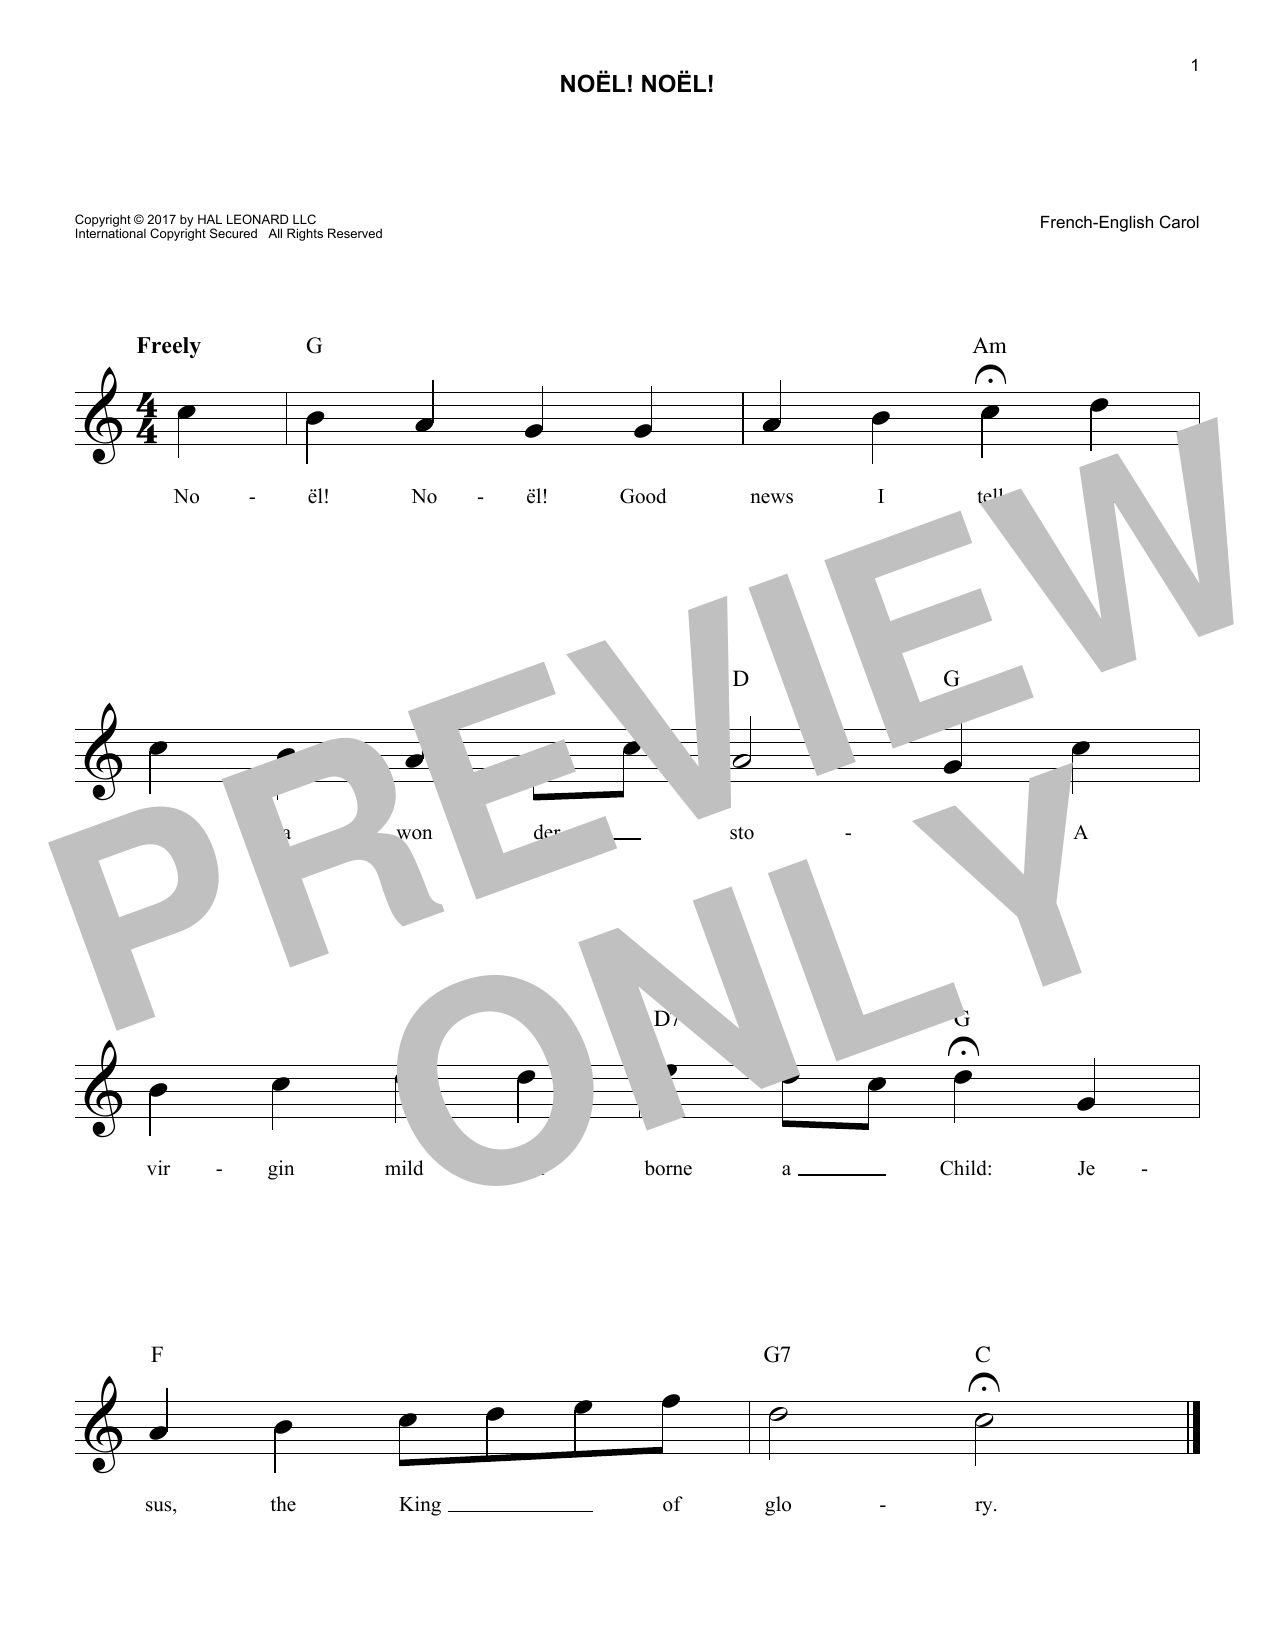 Traditional Carol Noel! Noel! Sheet Music Notes & Chords for Melody Line, Lyrics & Chords - Download or Print PDF